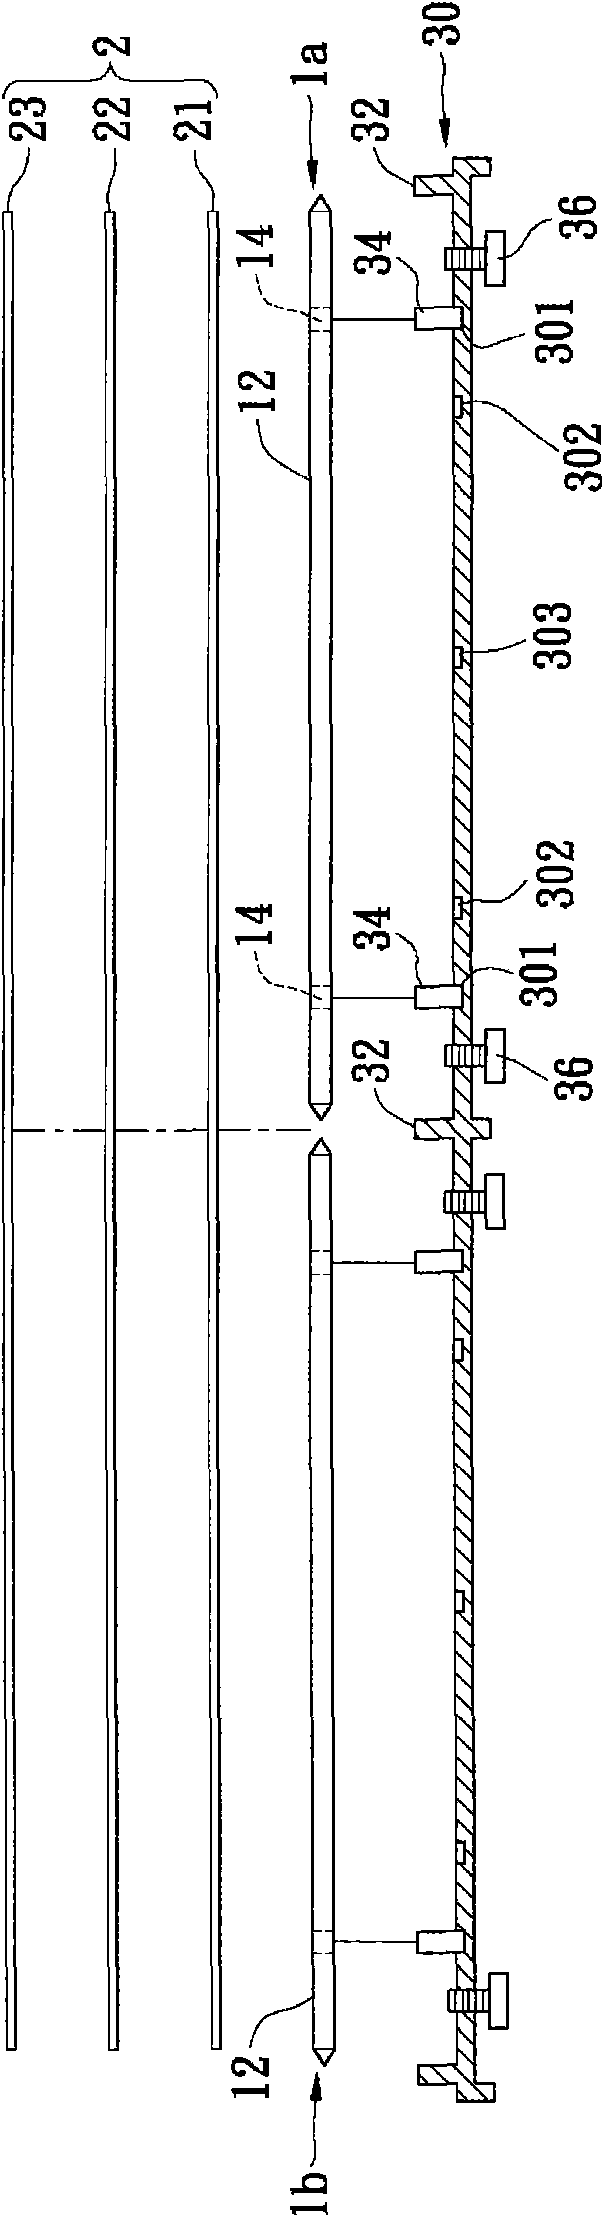 Method for manufacturing light-emitting diode lamp